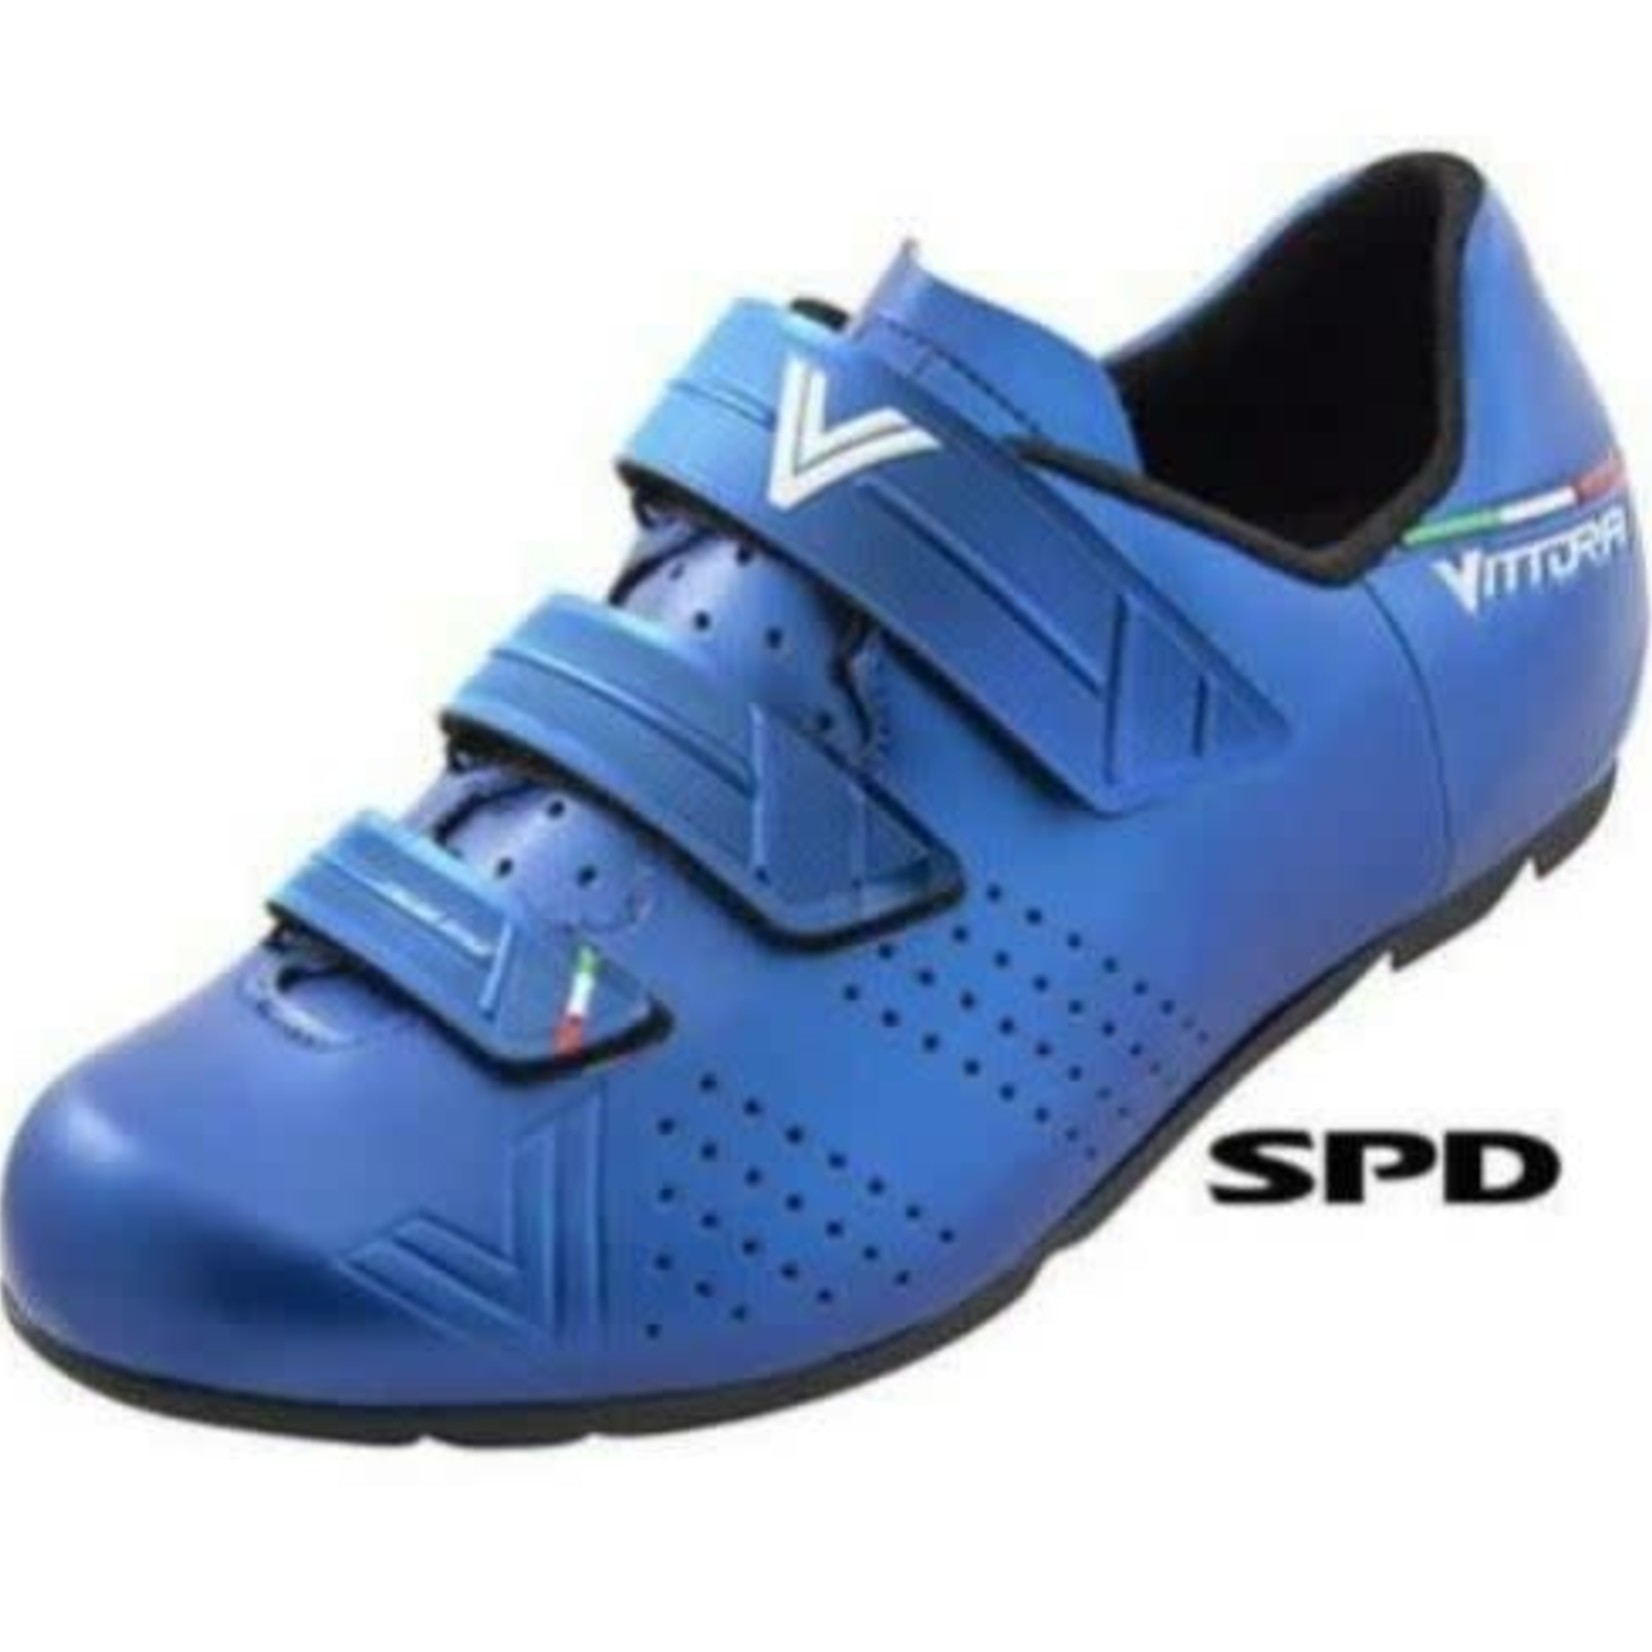 Vittoria VITTORIA, RAPIDE GT BLUE, SIZE 42.5, SPD